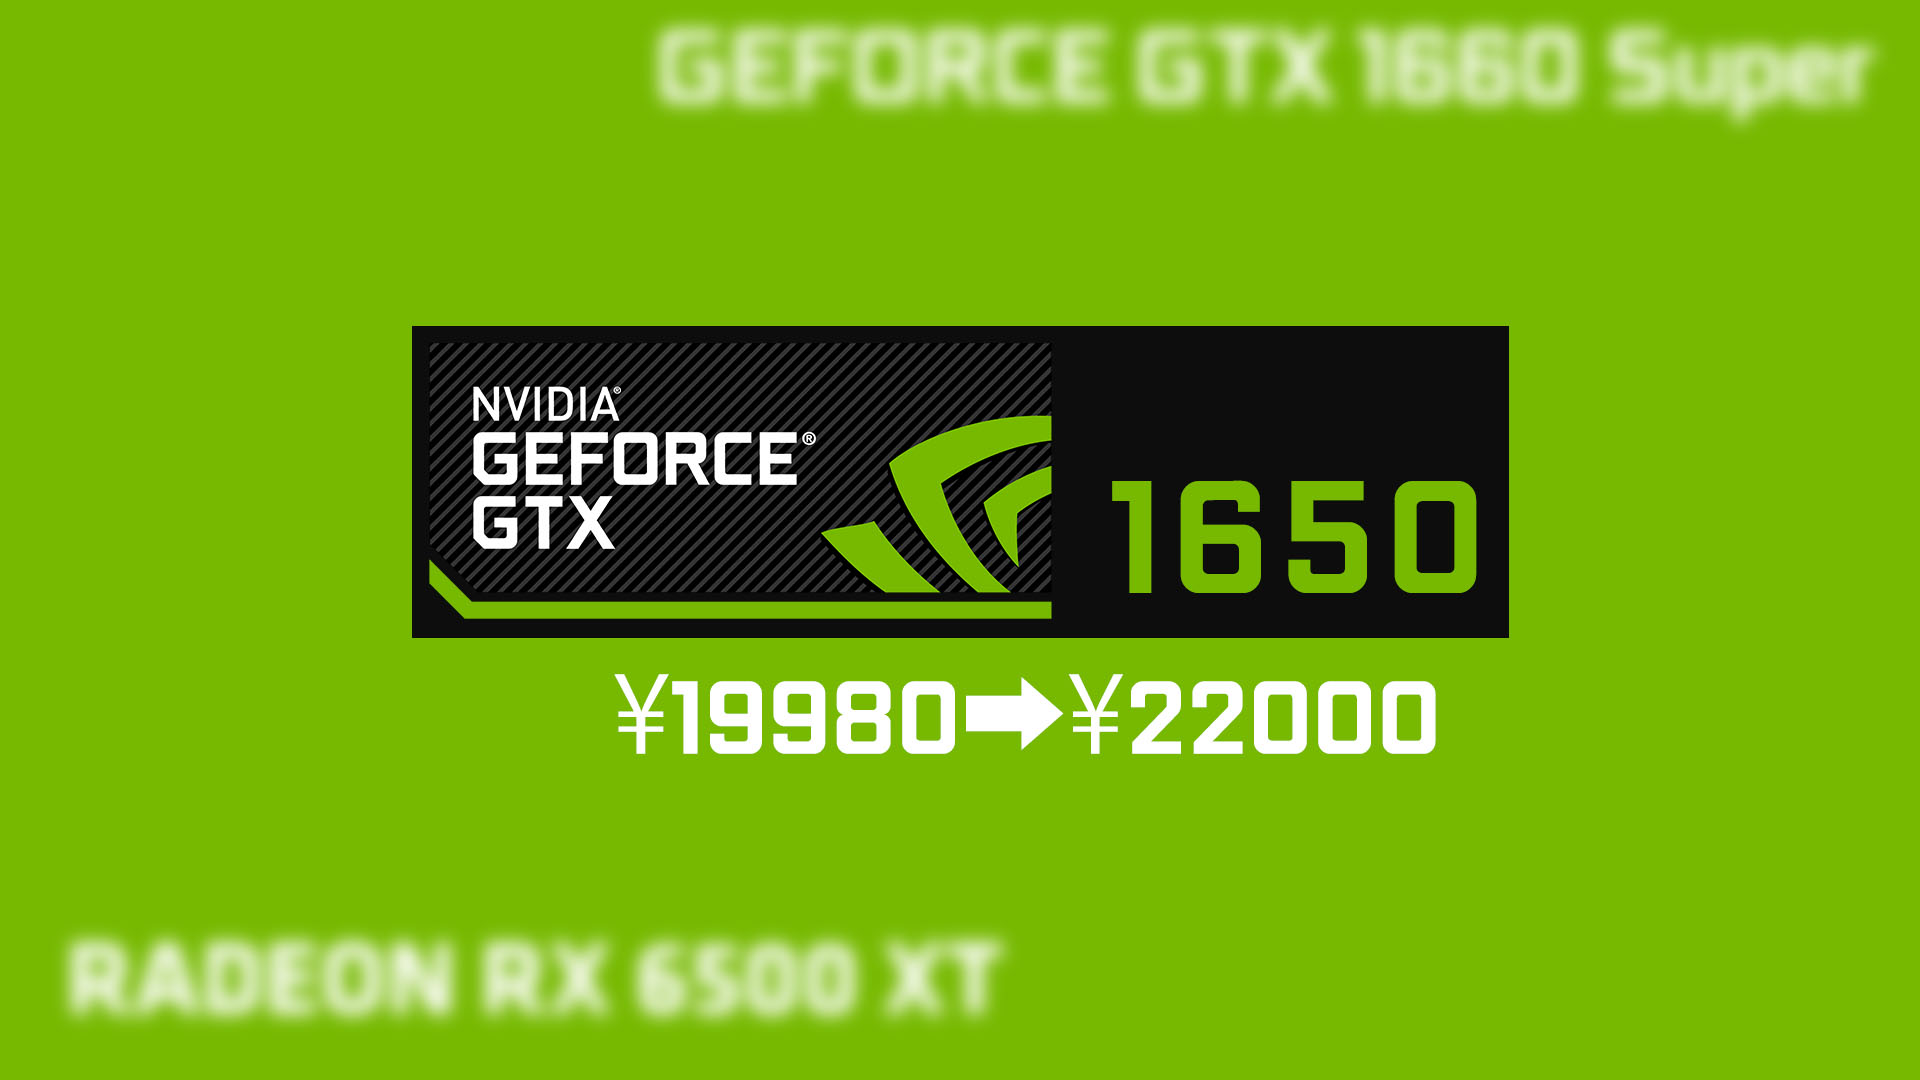 NVIDIA GeForce GTX の性能、コスパと適正価格を解説。安さが人気